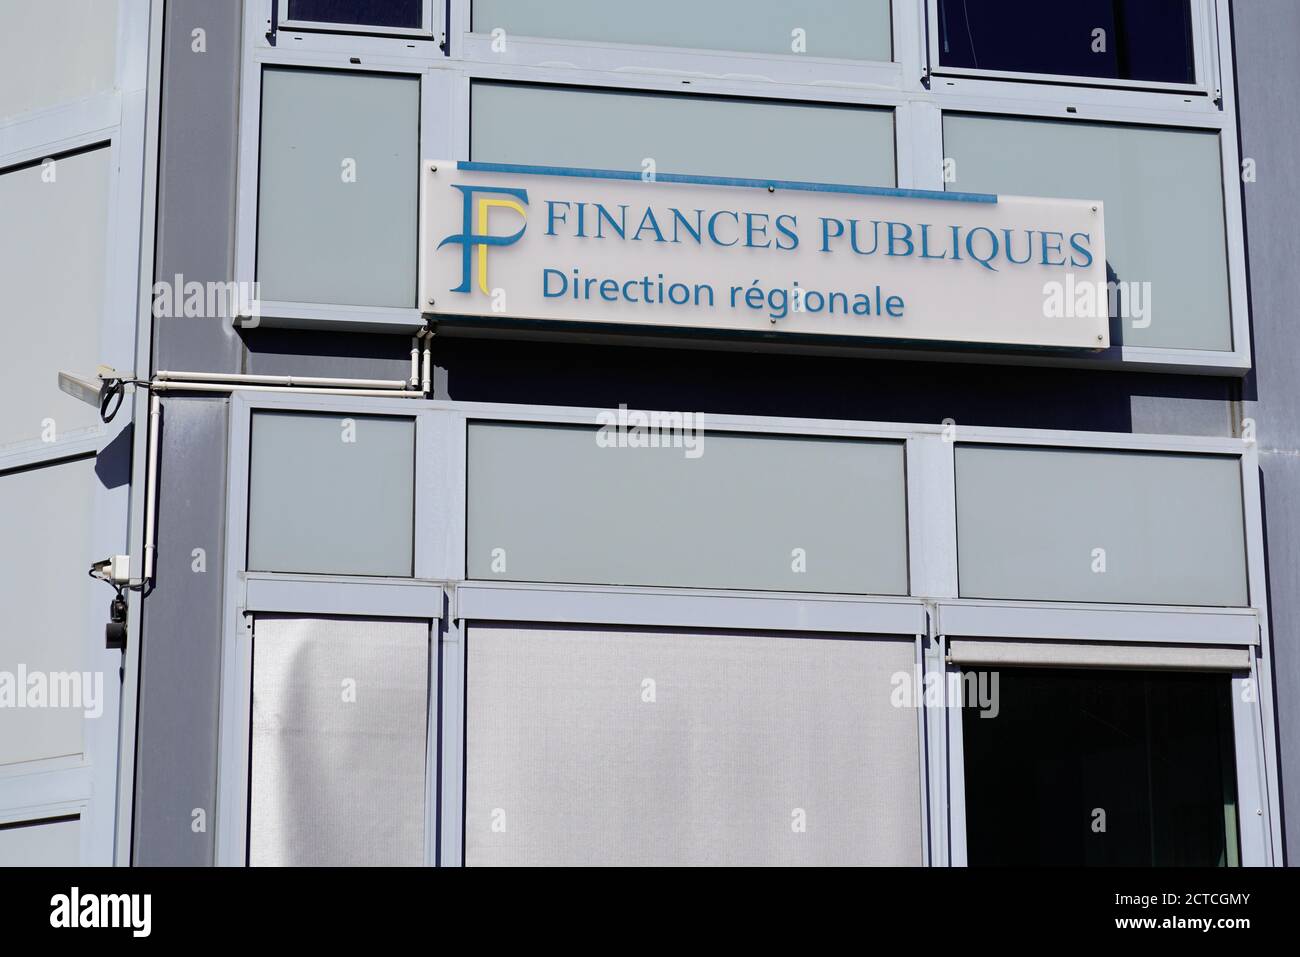 Bordeaux , Aquitaine / France - 09 20 2020 : Finances Publiques direction regionale logo and text sign on wall office building of public finance admin Stock Photo